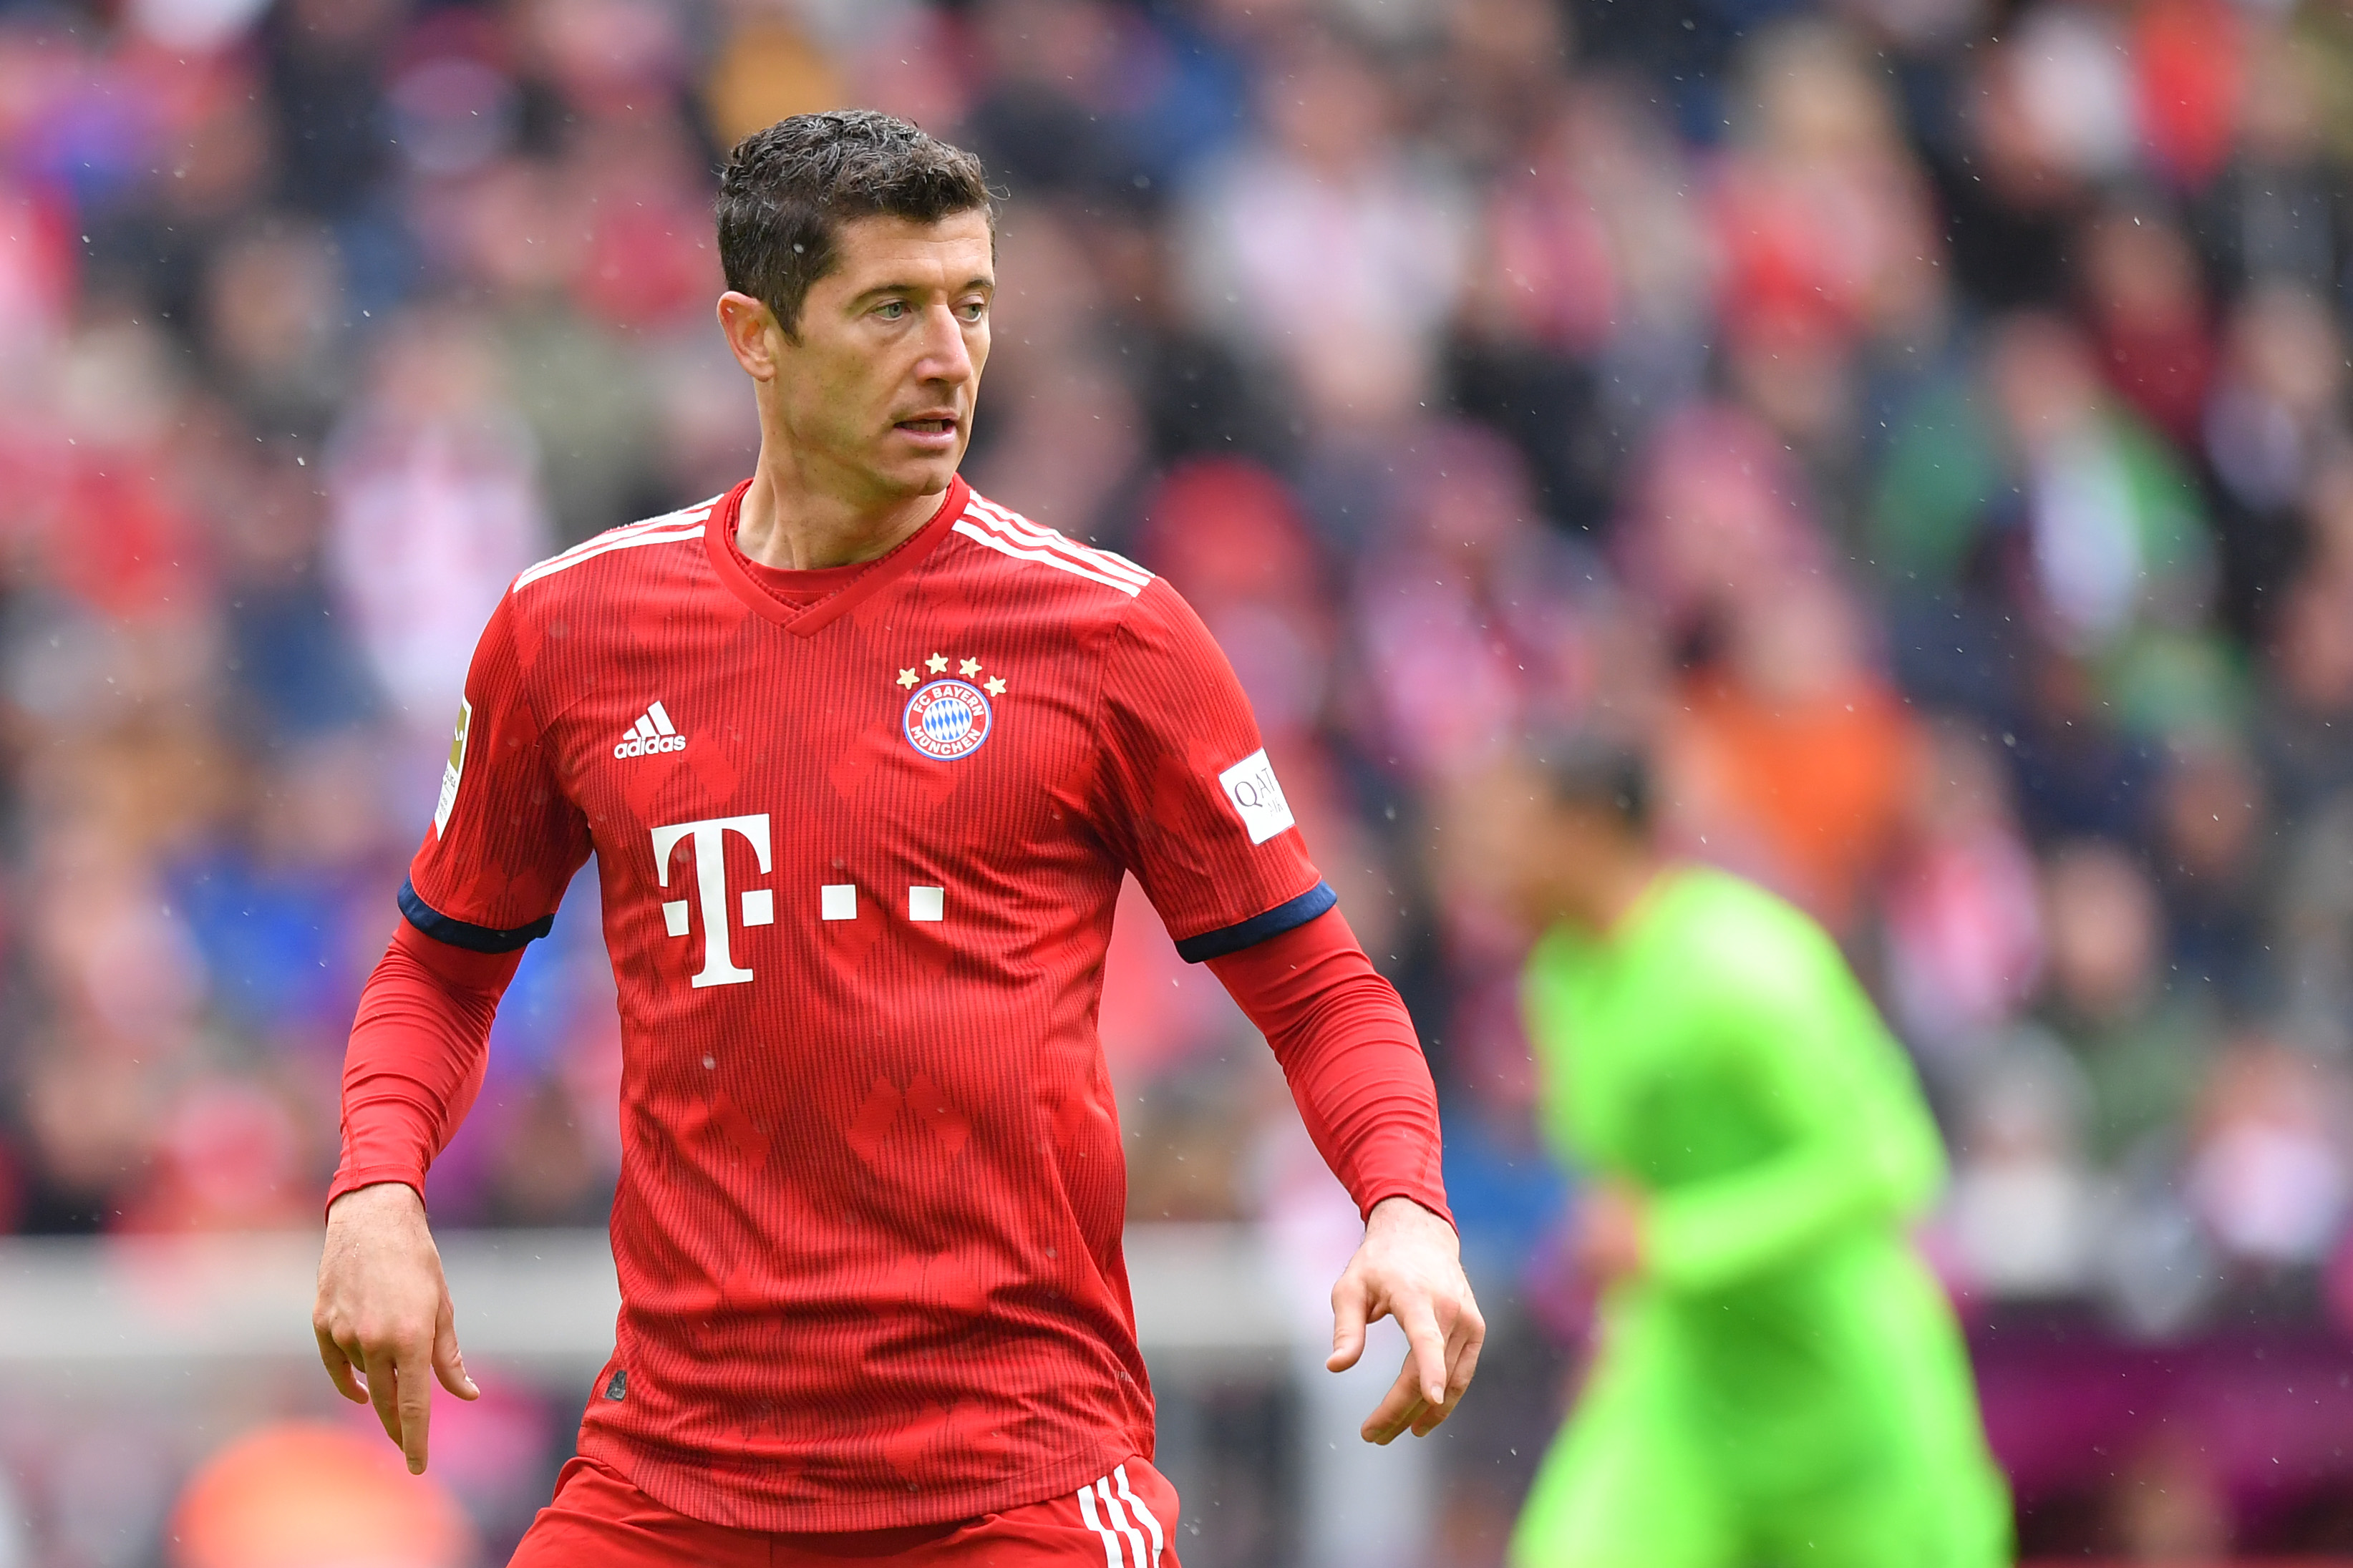 Lewandowski scored 50 goals for Bayern Munich across competitions this season. (Photo by Sebastian Widmann/Bongarts/Getty Images)